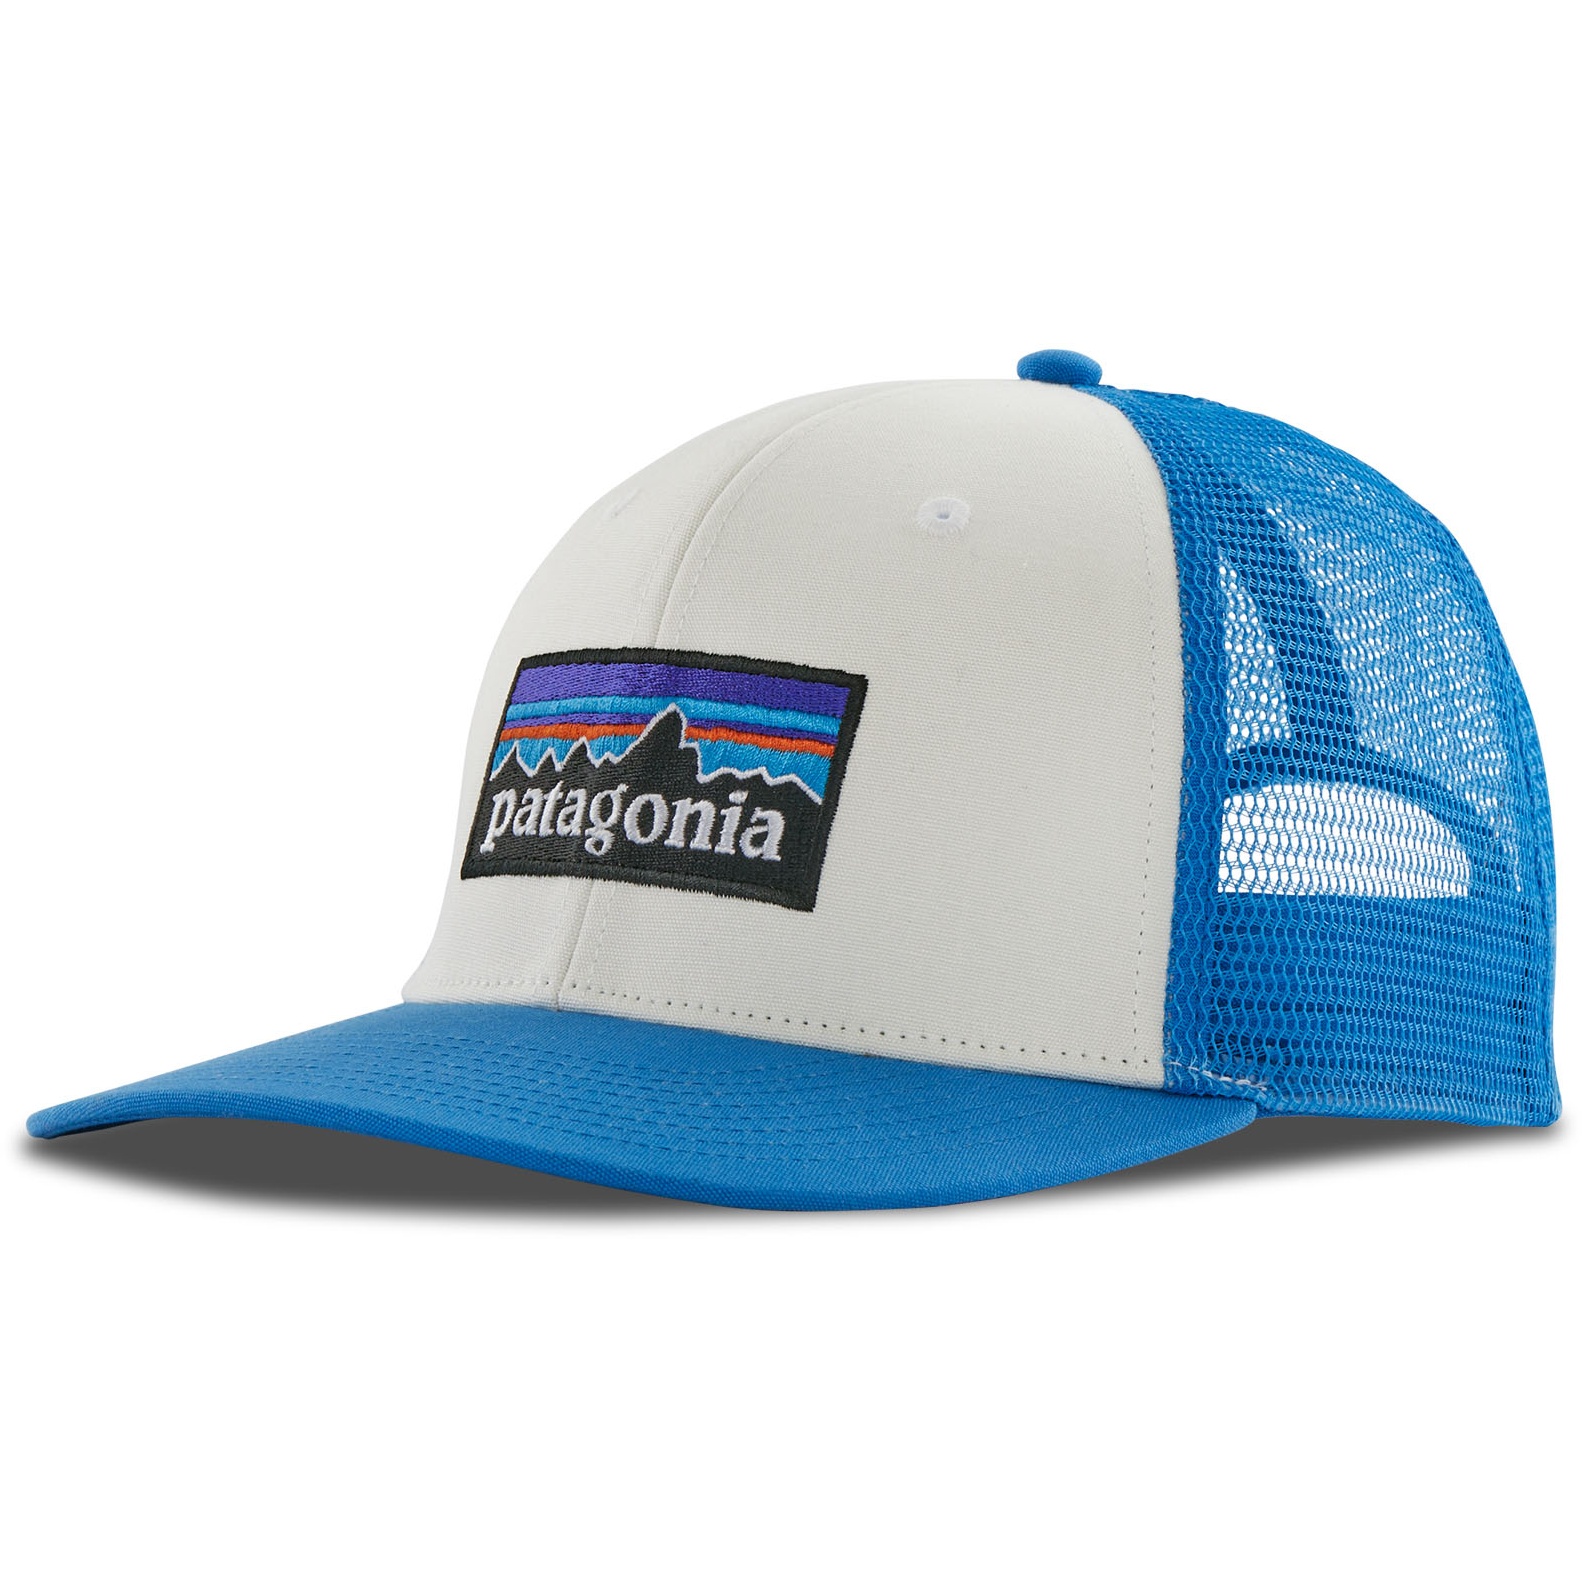 Productfoto van Patagonia P-6 Logo Trucker Pet - White w/Vessel Blue